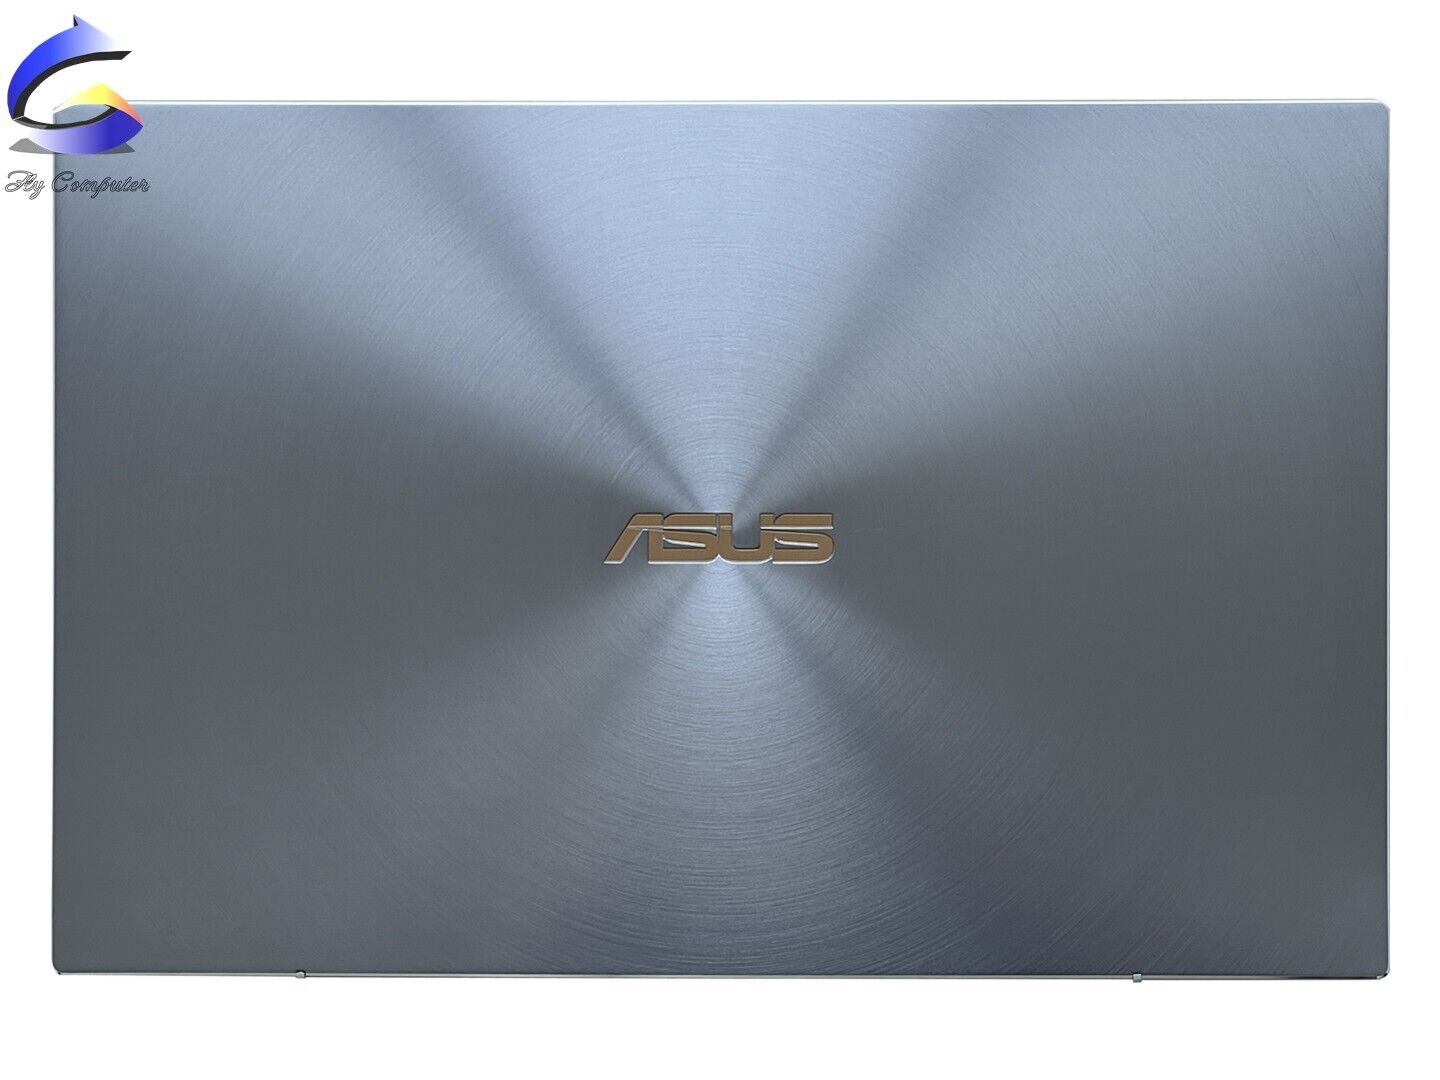 98%New For Asus ZenBook 14 UX431F UM431D DA BX431 Laptop LCD Back Cover Top Case